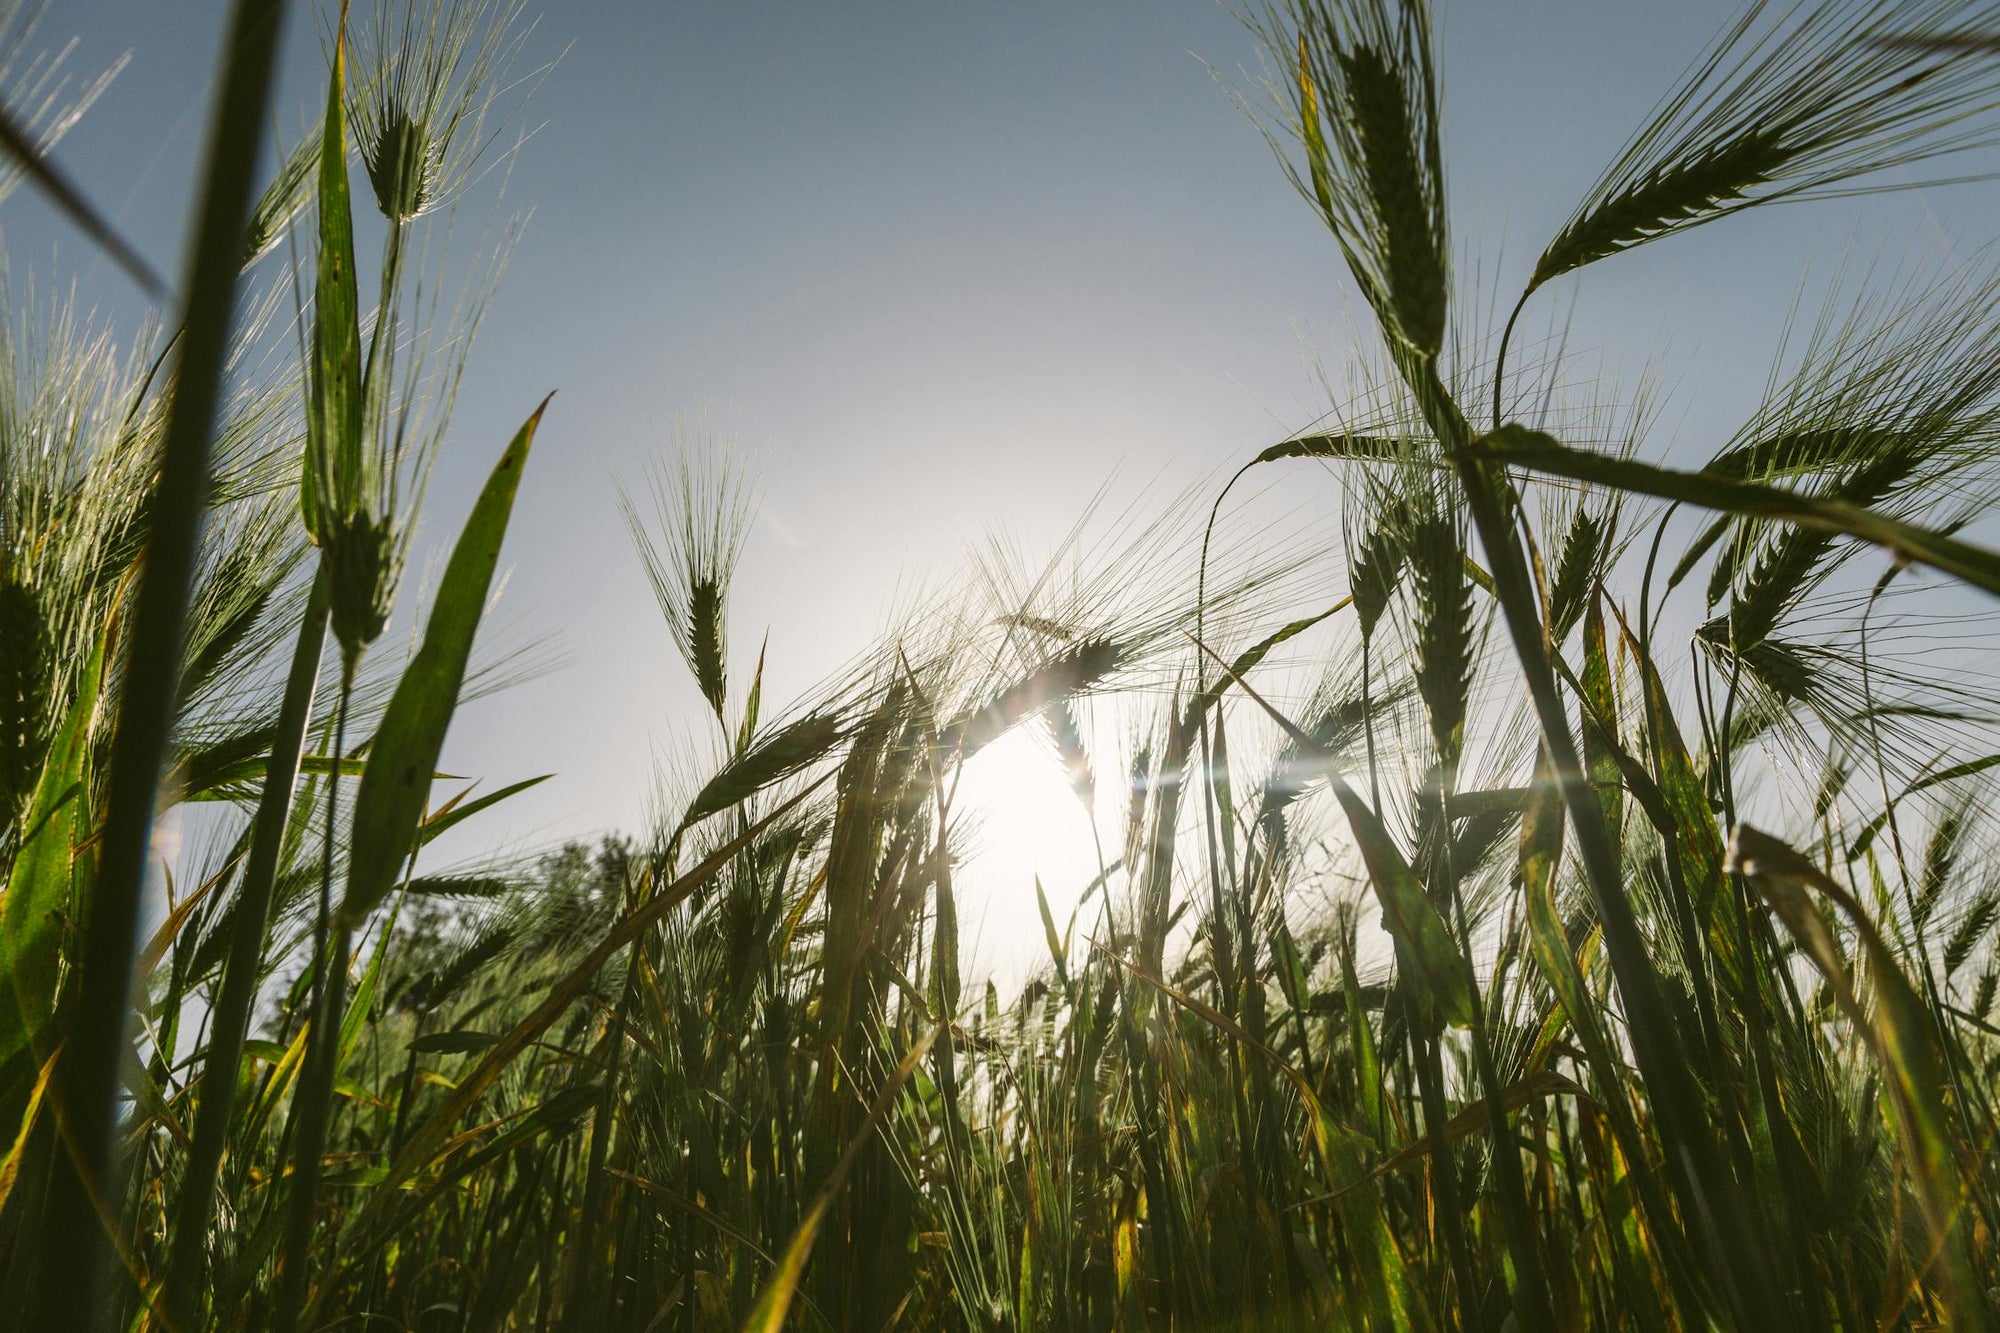 Barley Grass Benefits